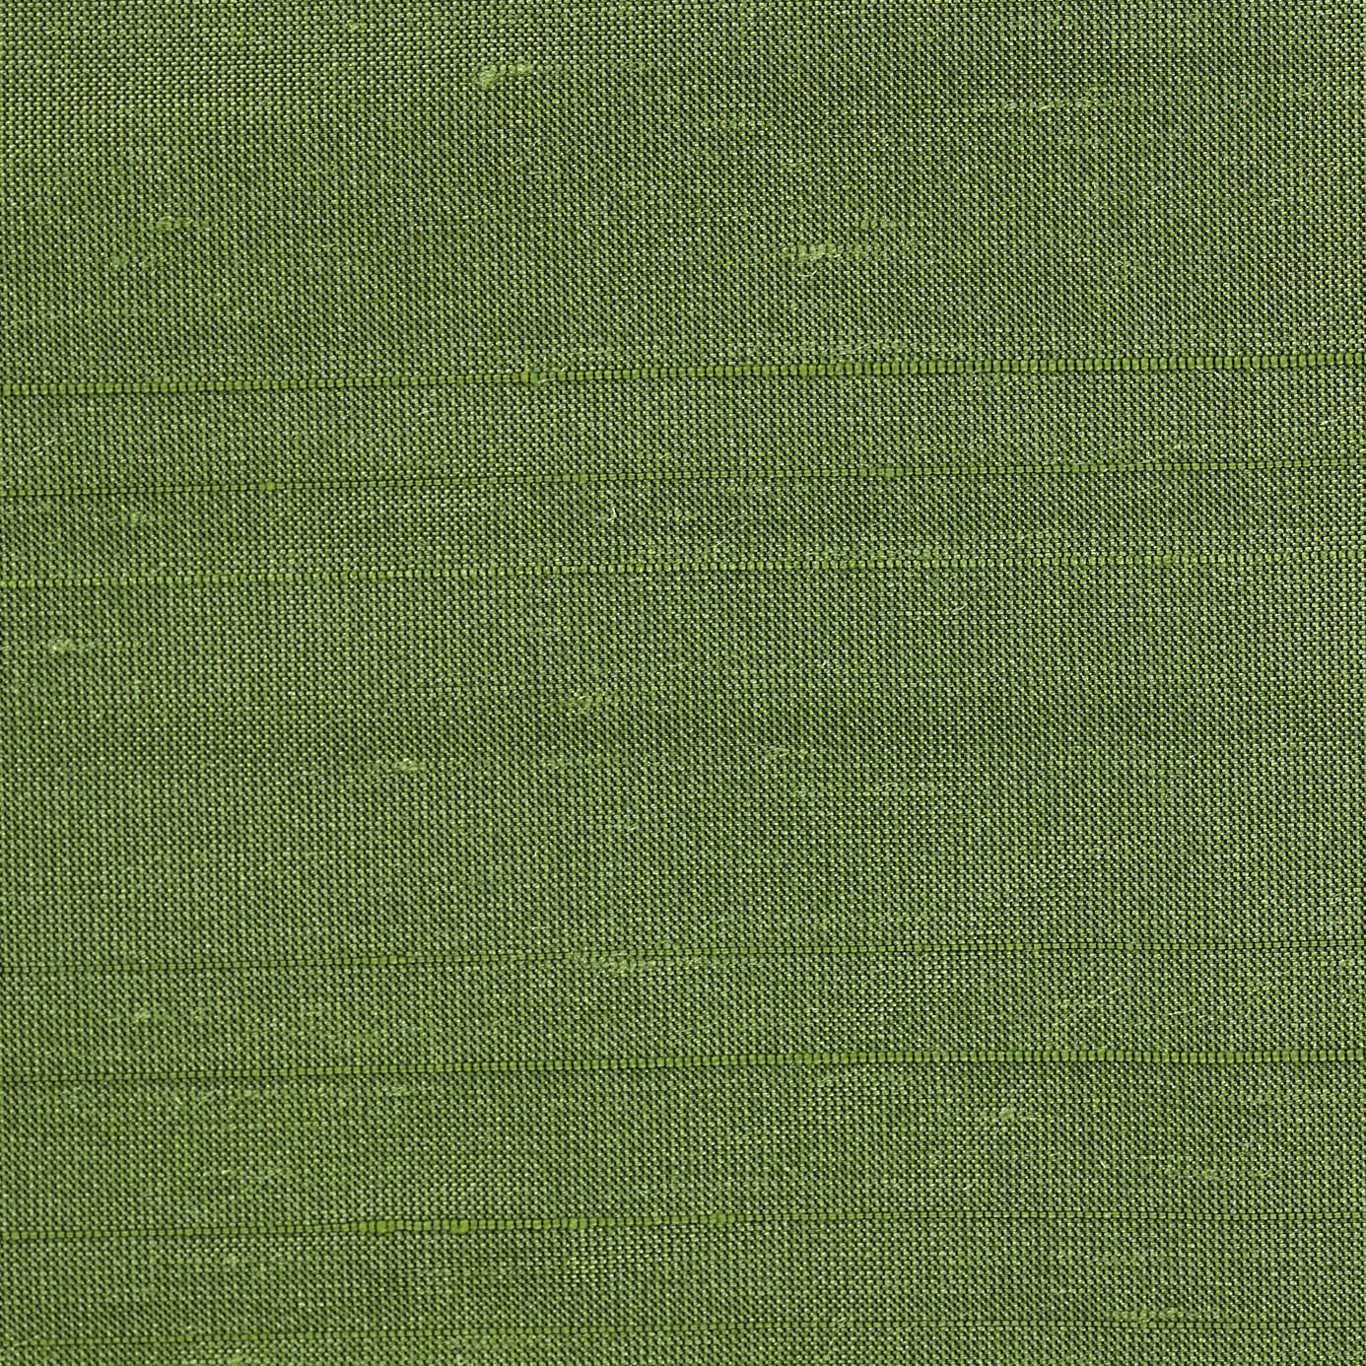 Deflect Fabric by Harlequin - HPOL440376 - Leaf